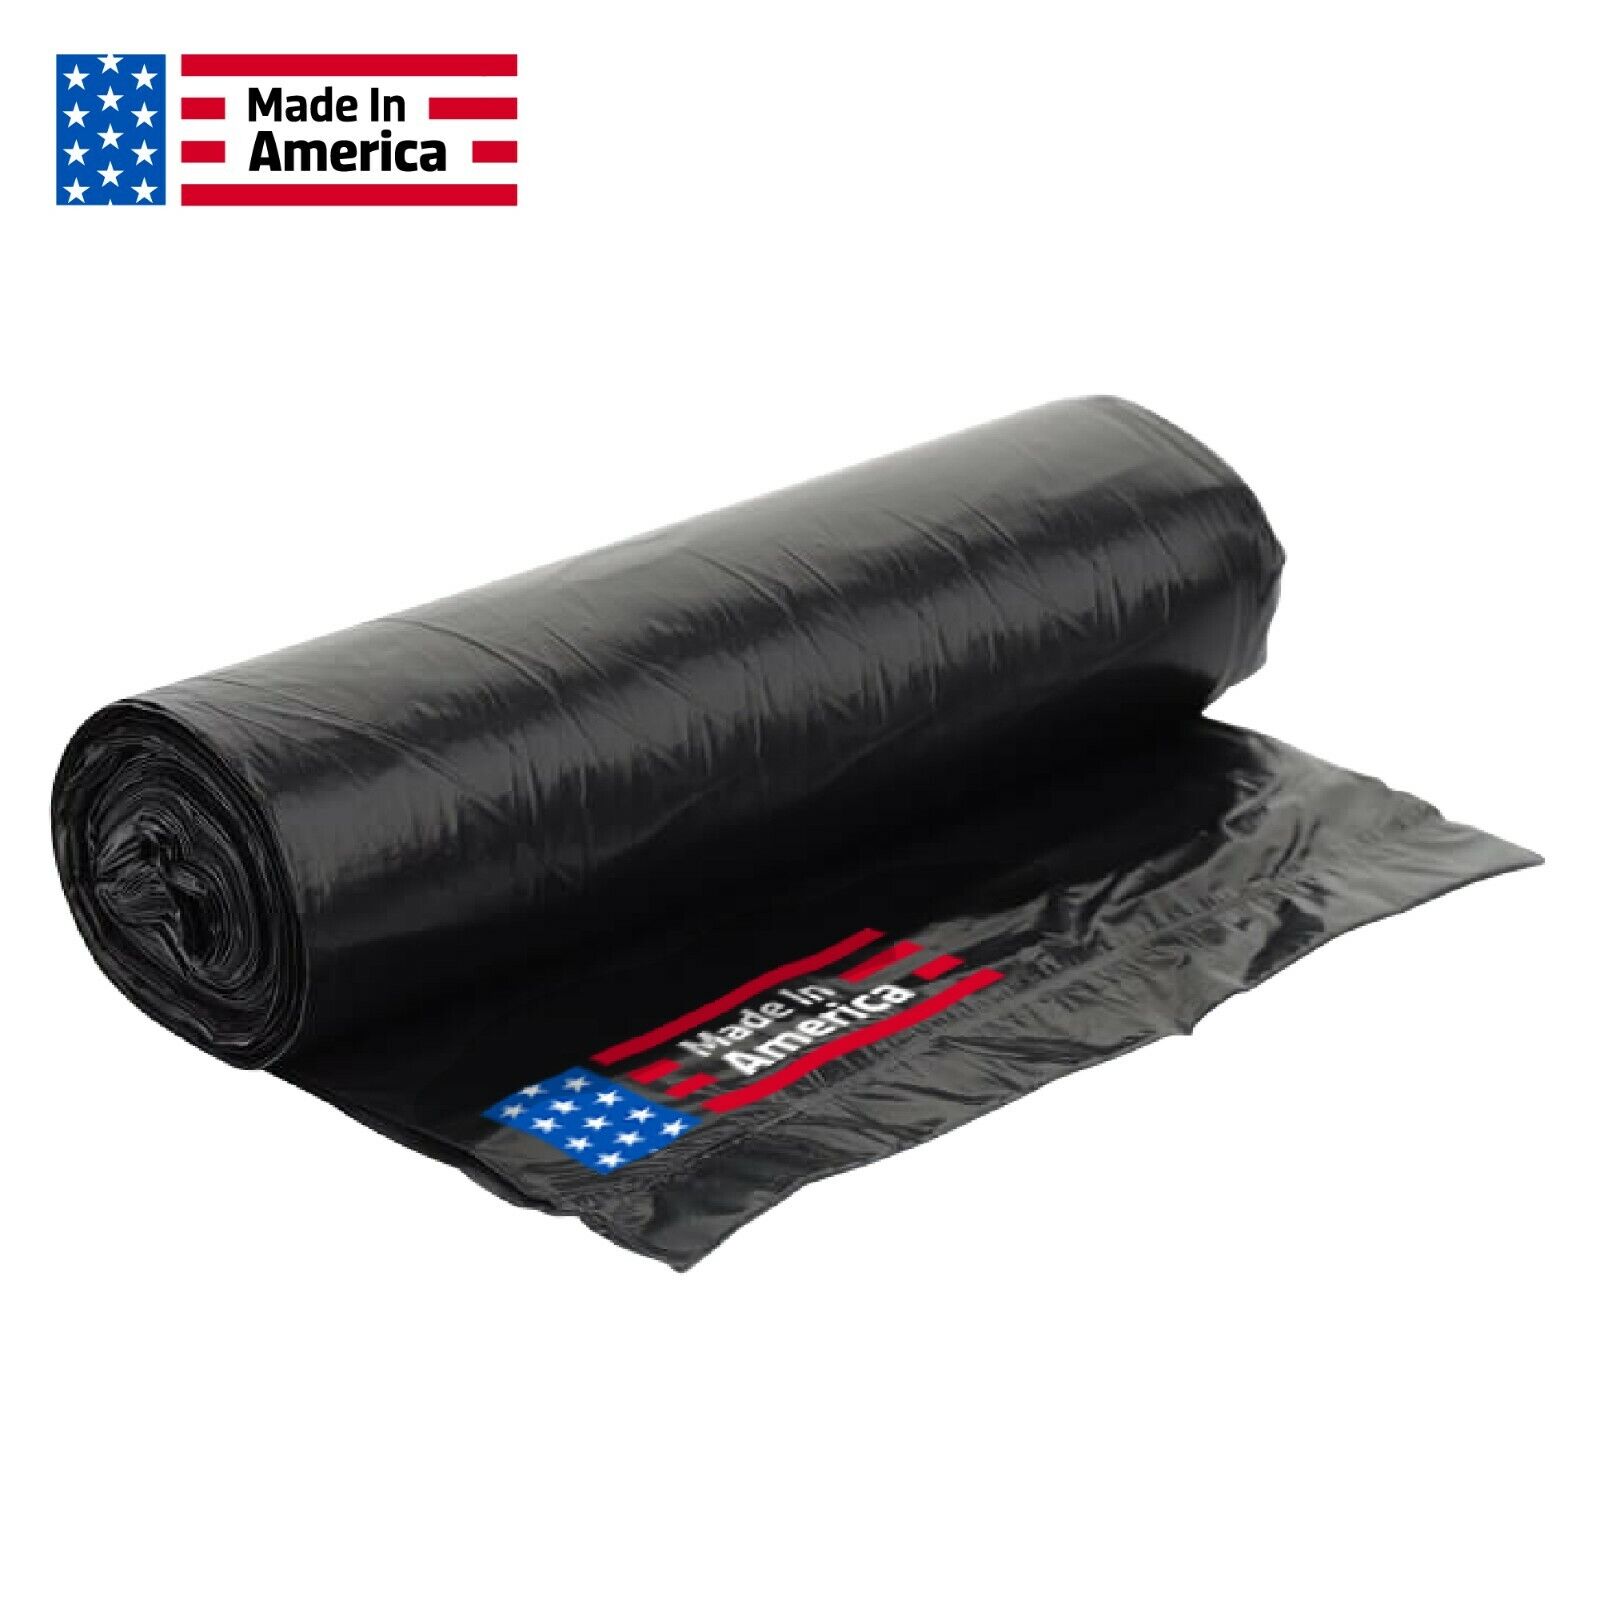 MADE IN USA - Plastic Sheeting Roll 20 ft. x 100 feet Black 6 Mi